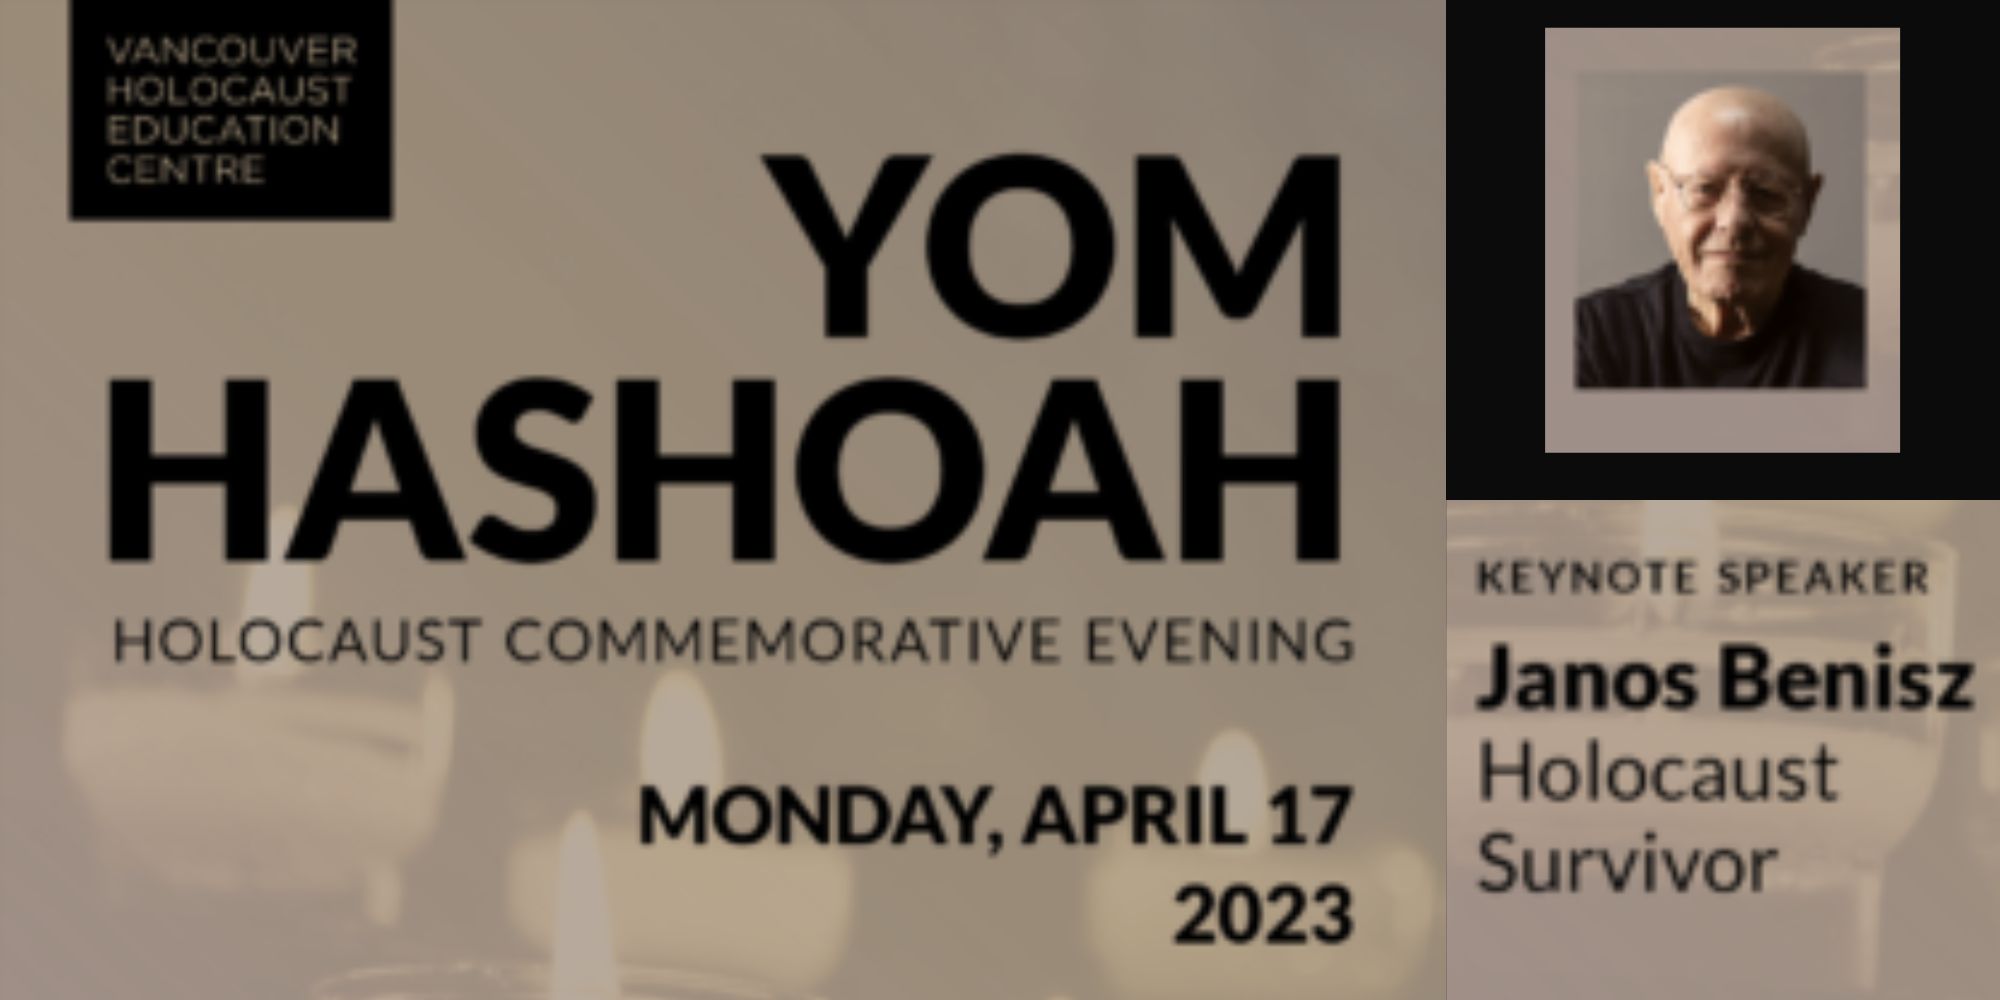 Yom HaShoah commemoration